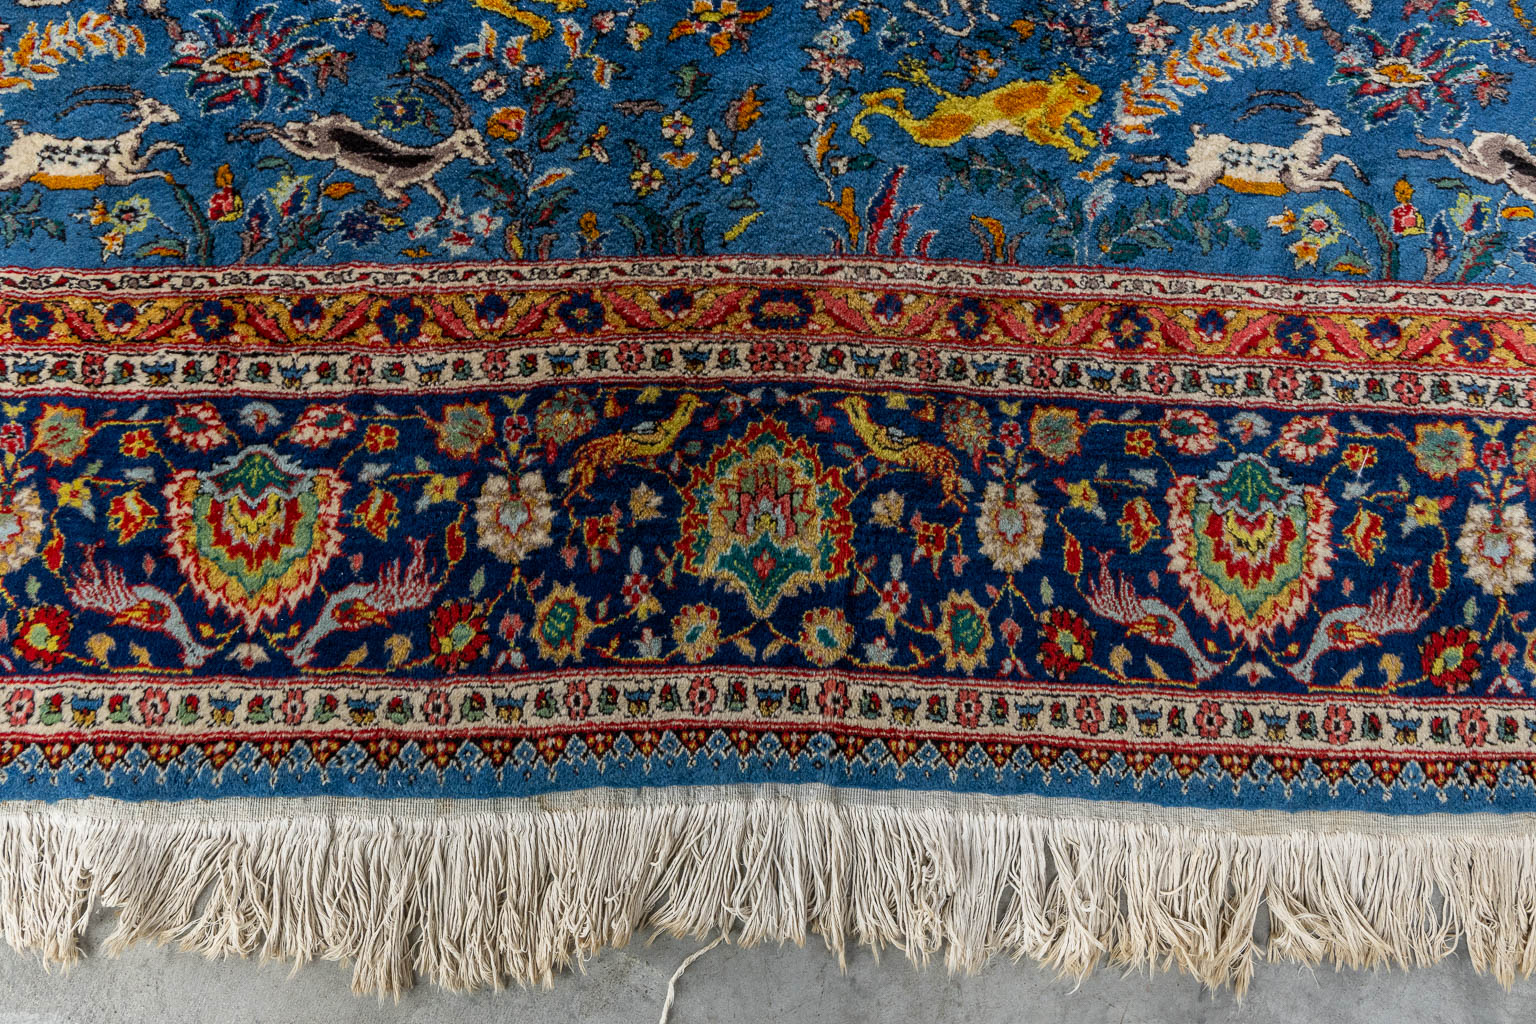 An Oriental hand-made carpet with figurative decor, Tabriz. (L:340 x W:243 cm)